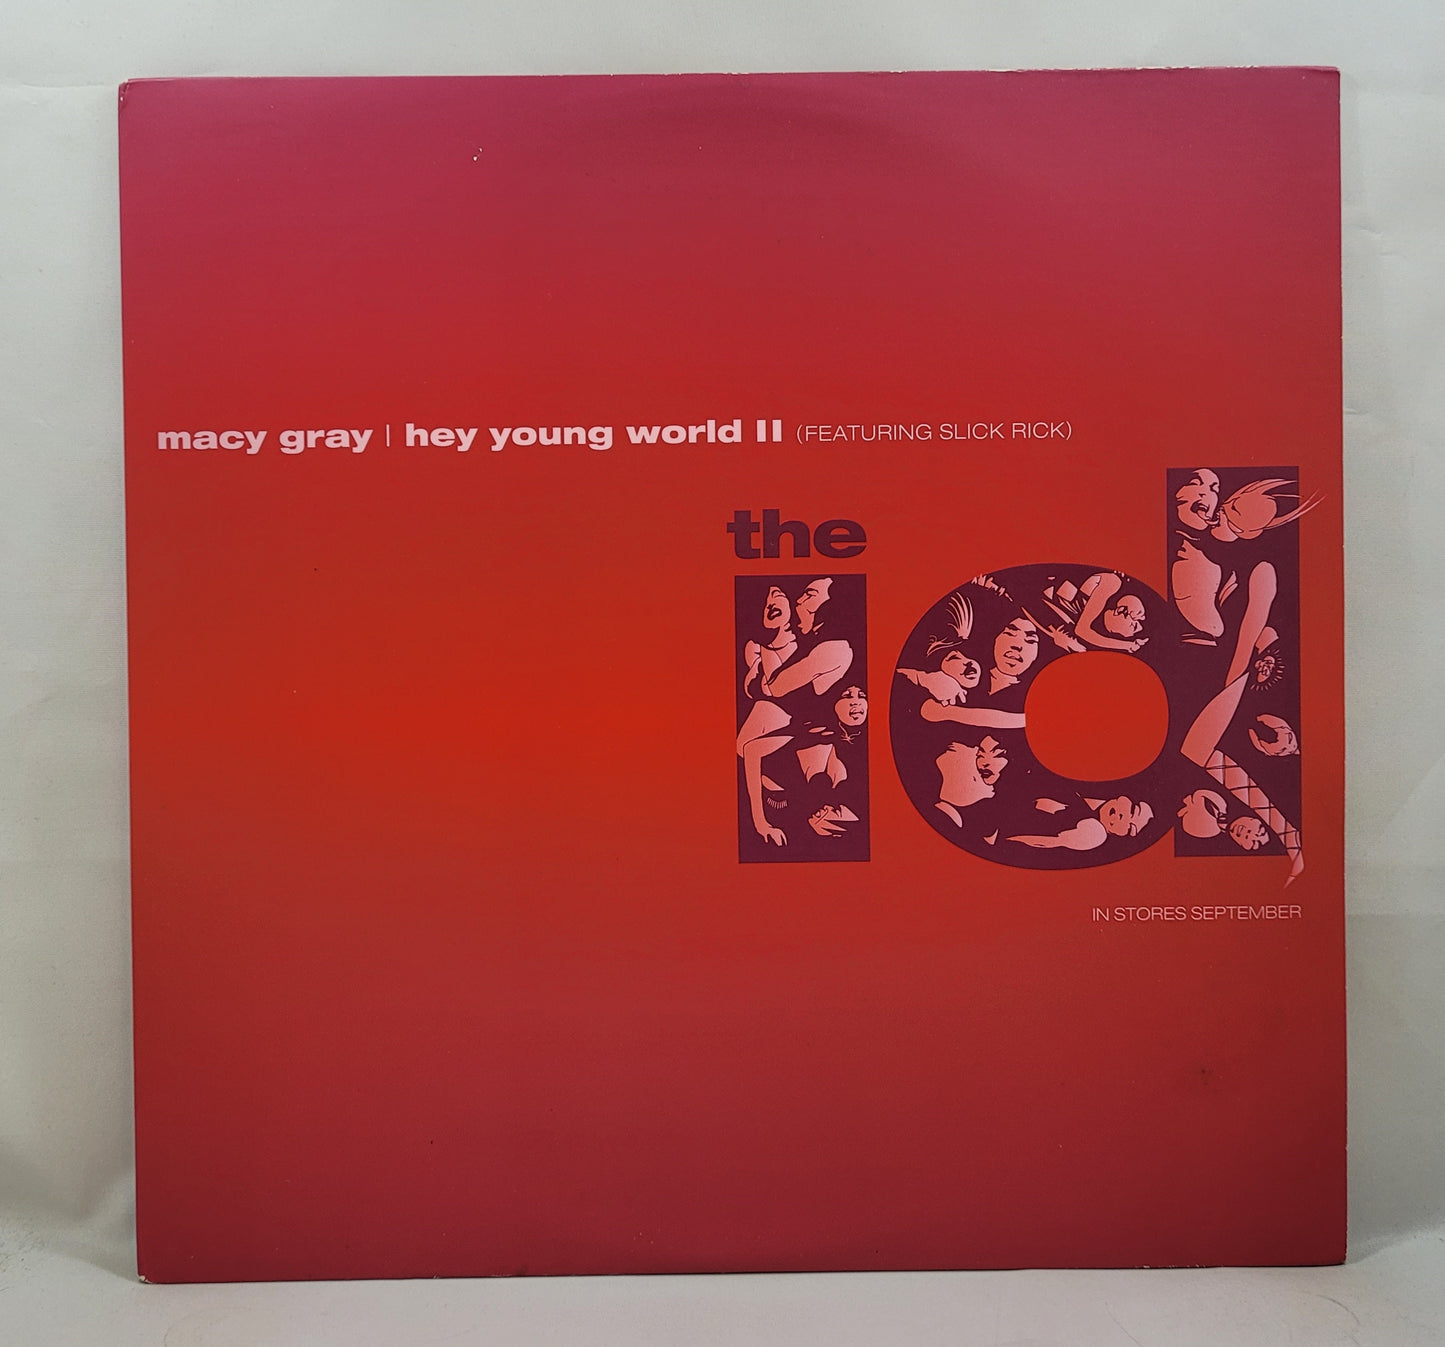 Macy Gray Featuring Slick Rick - Hey Young World II [2001 Promo] [Vinyl Record 12" Single]